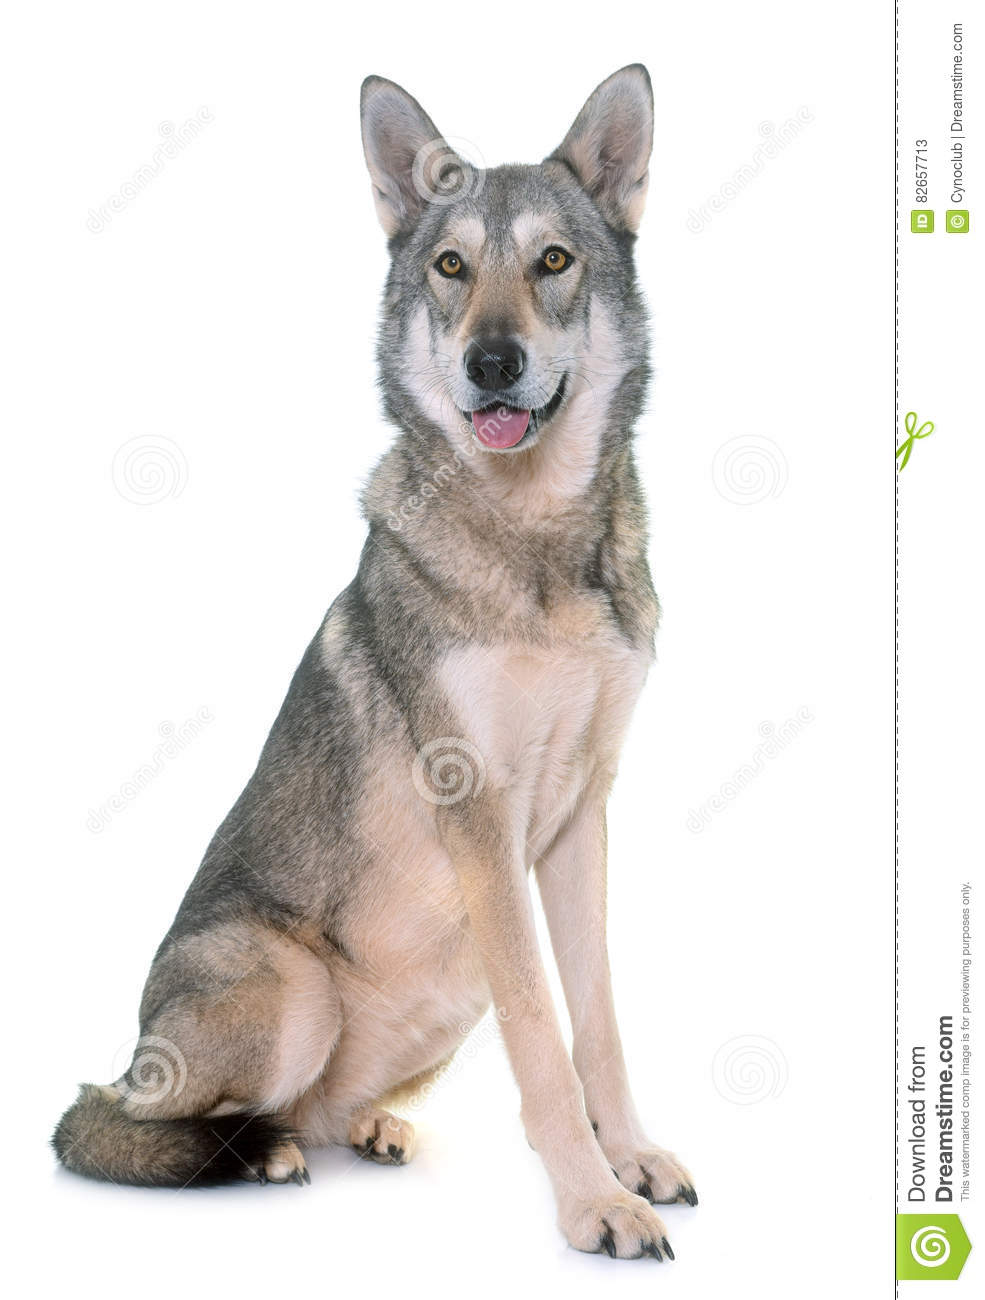 Sarlose hundikoer (Saarlooswolfdog)